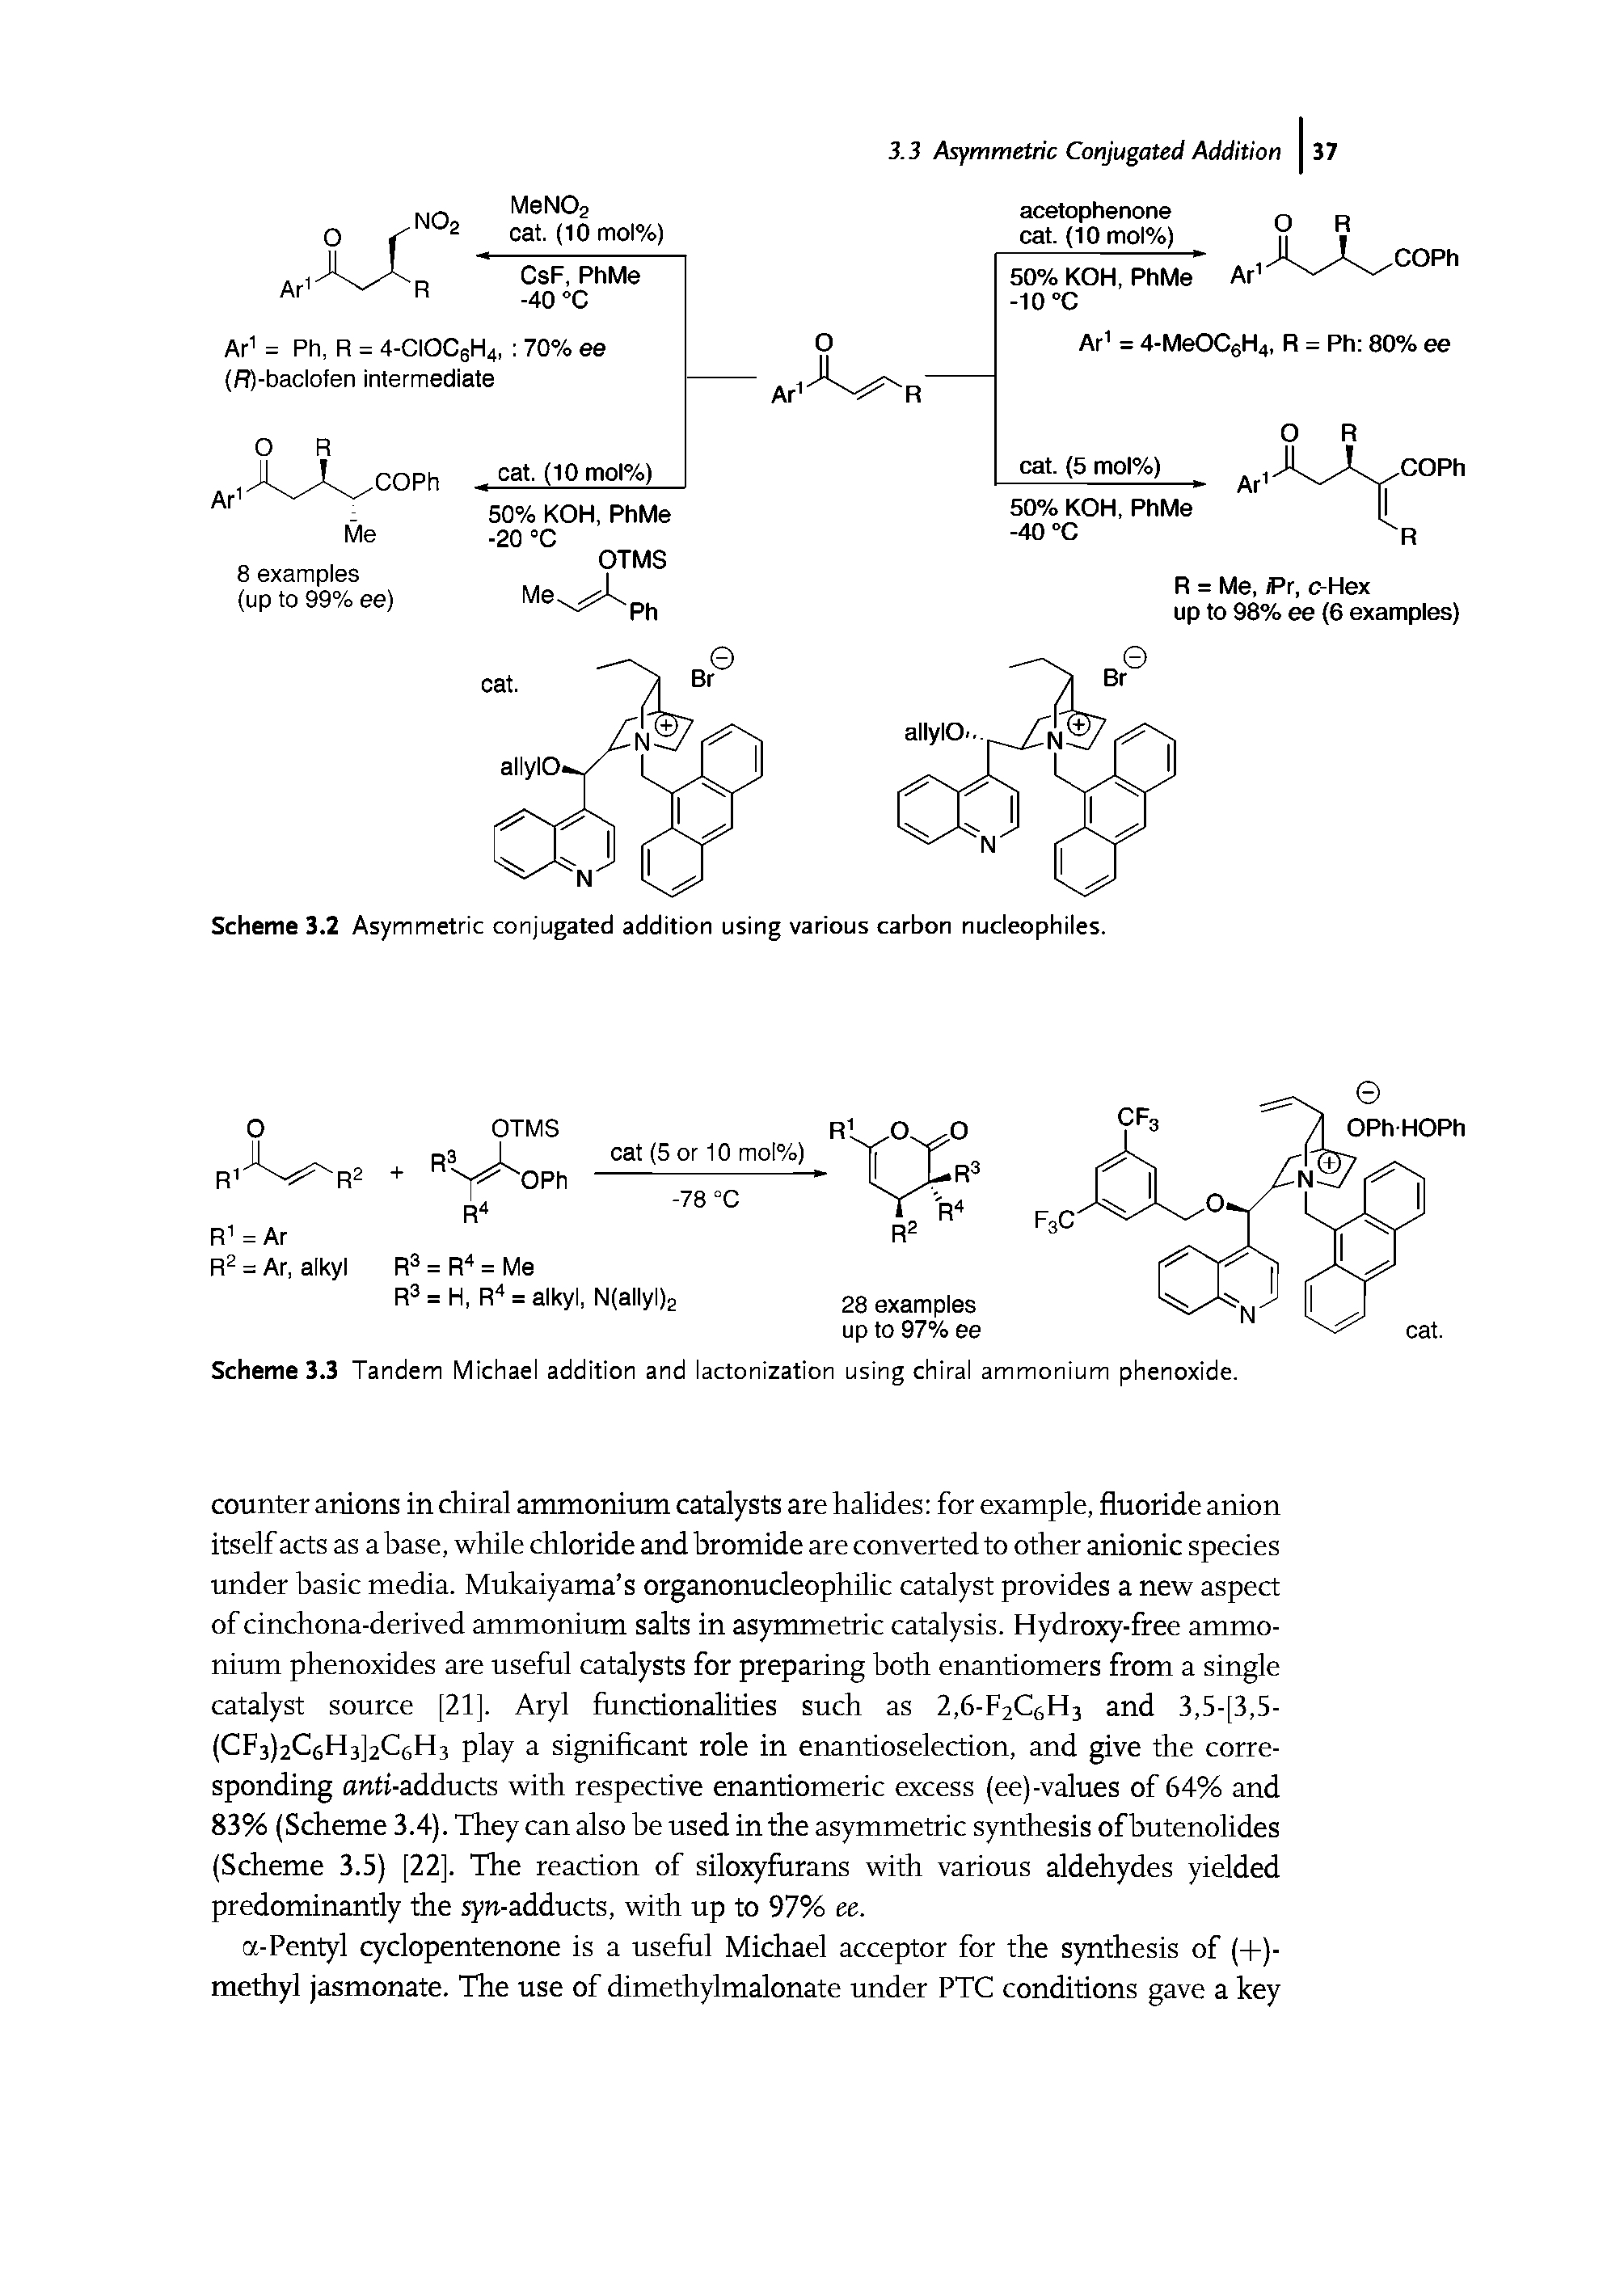 Scheme 3.3 Tandem Michael addition and lactonization using chiral ammonium phenoxide.